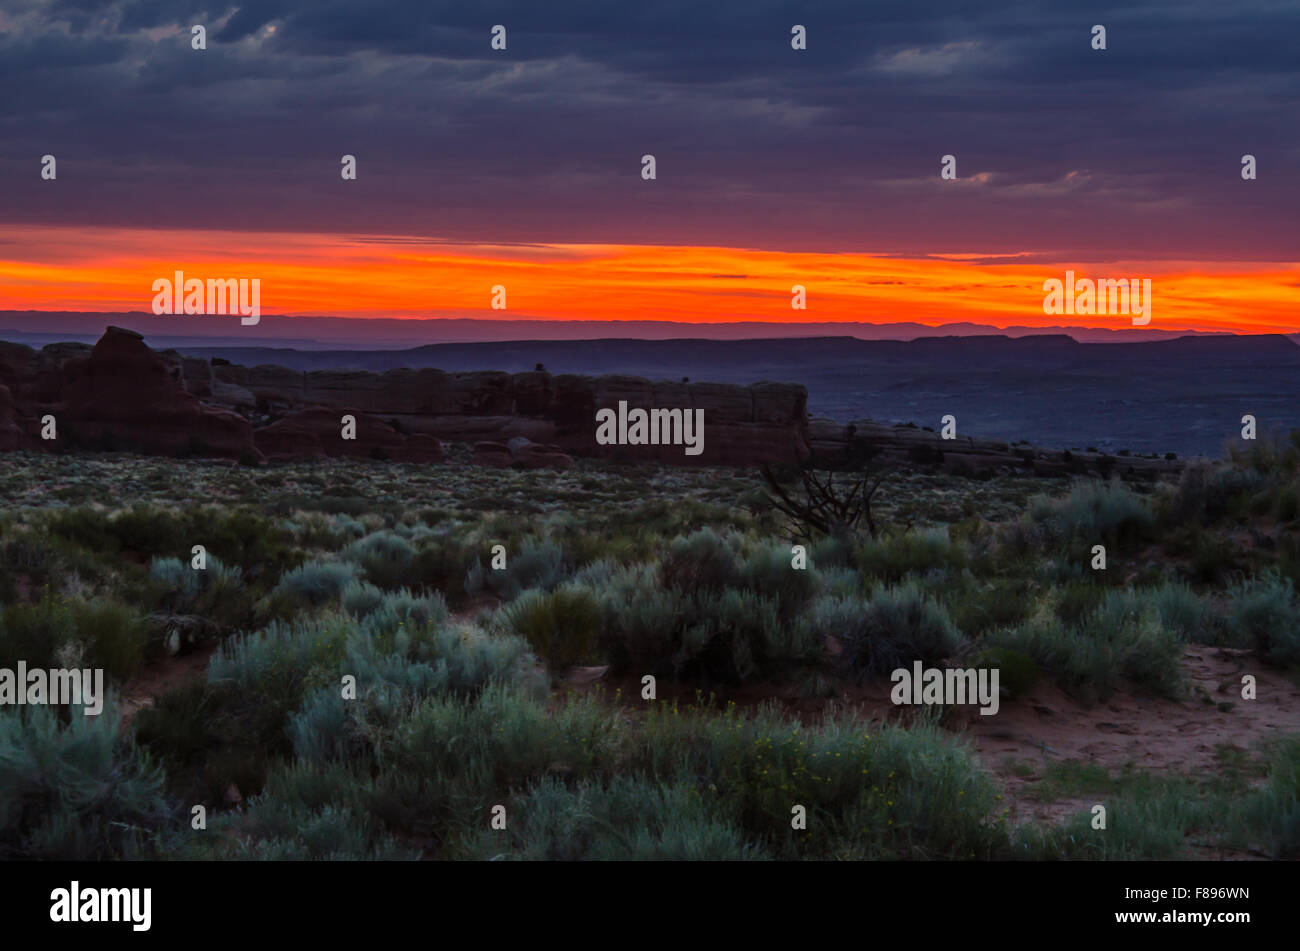 The sky turns brilliant pink and orange as dawn breaks over a vast desert in Utah Stock Photo